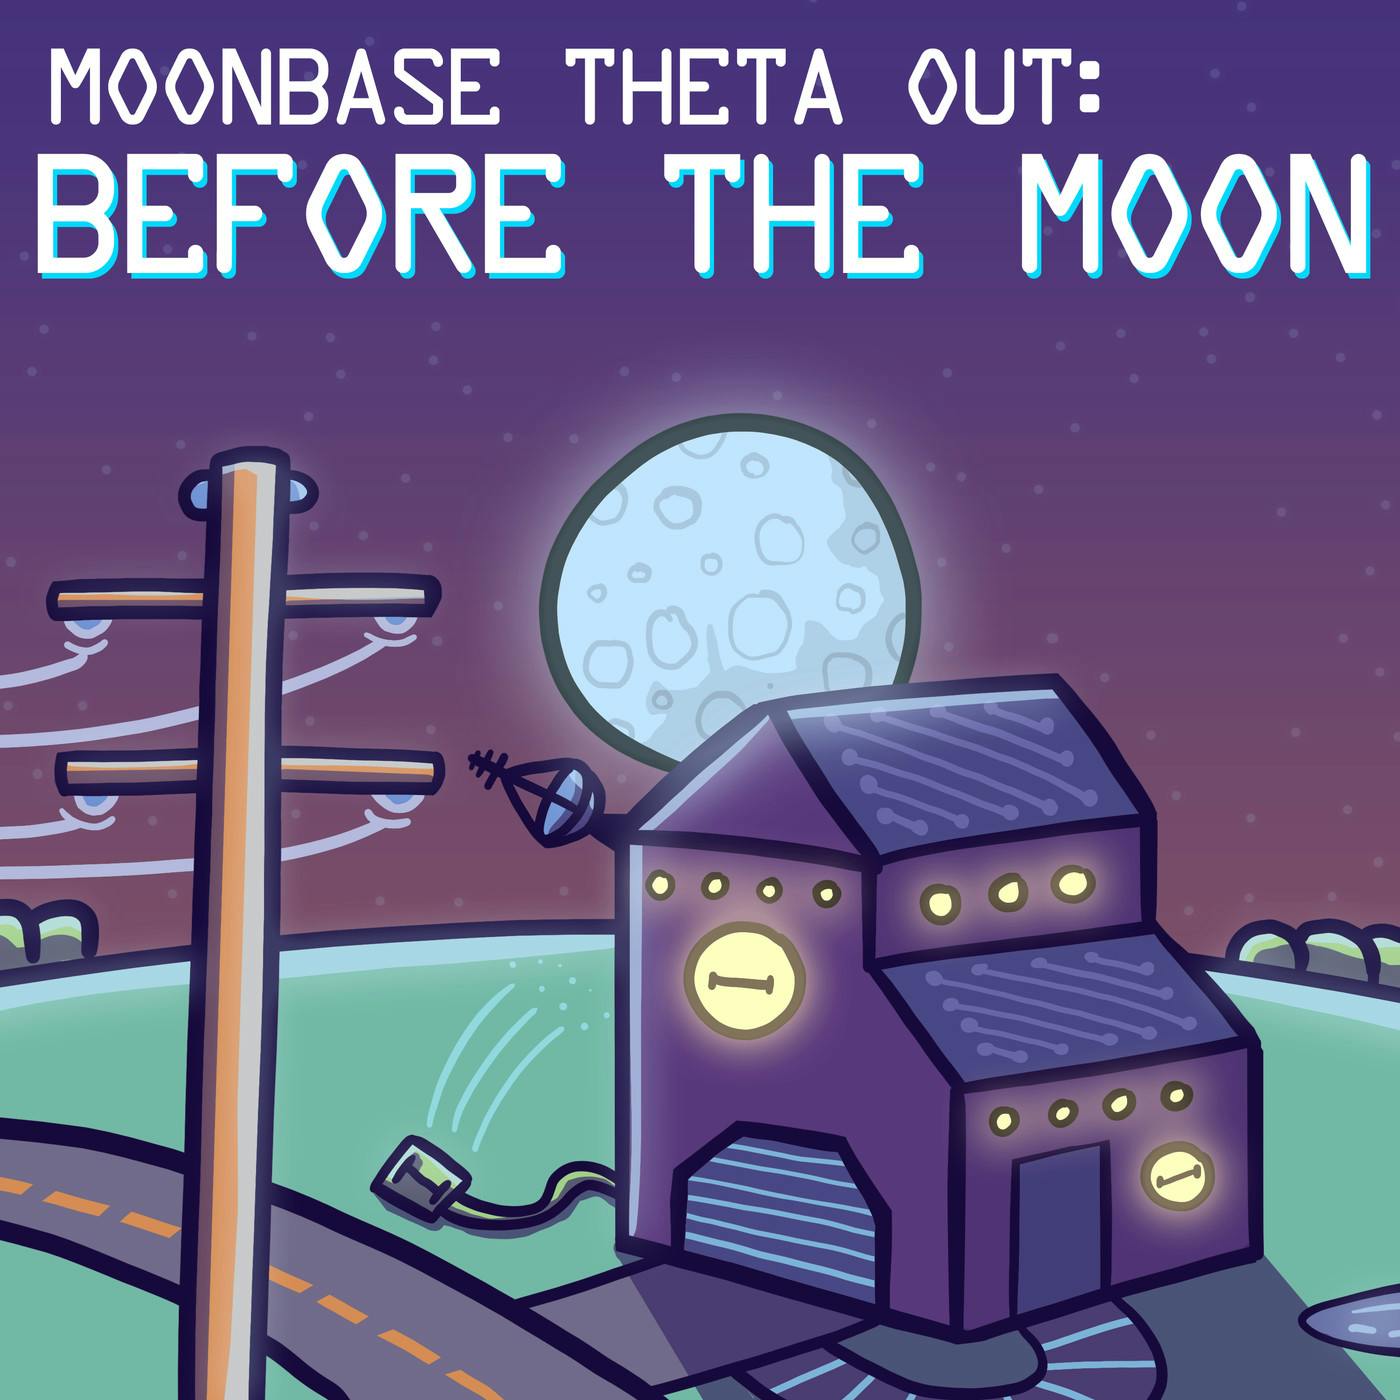 "Moonbase Theta, Out" Podcast